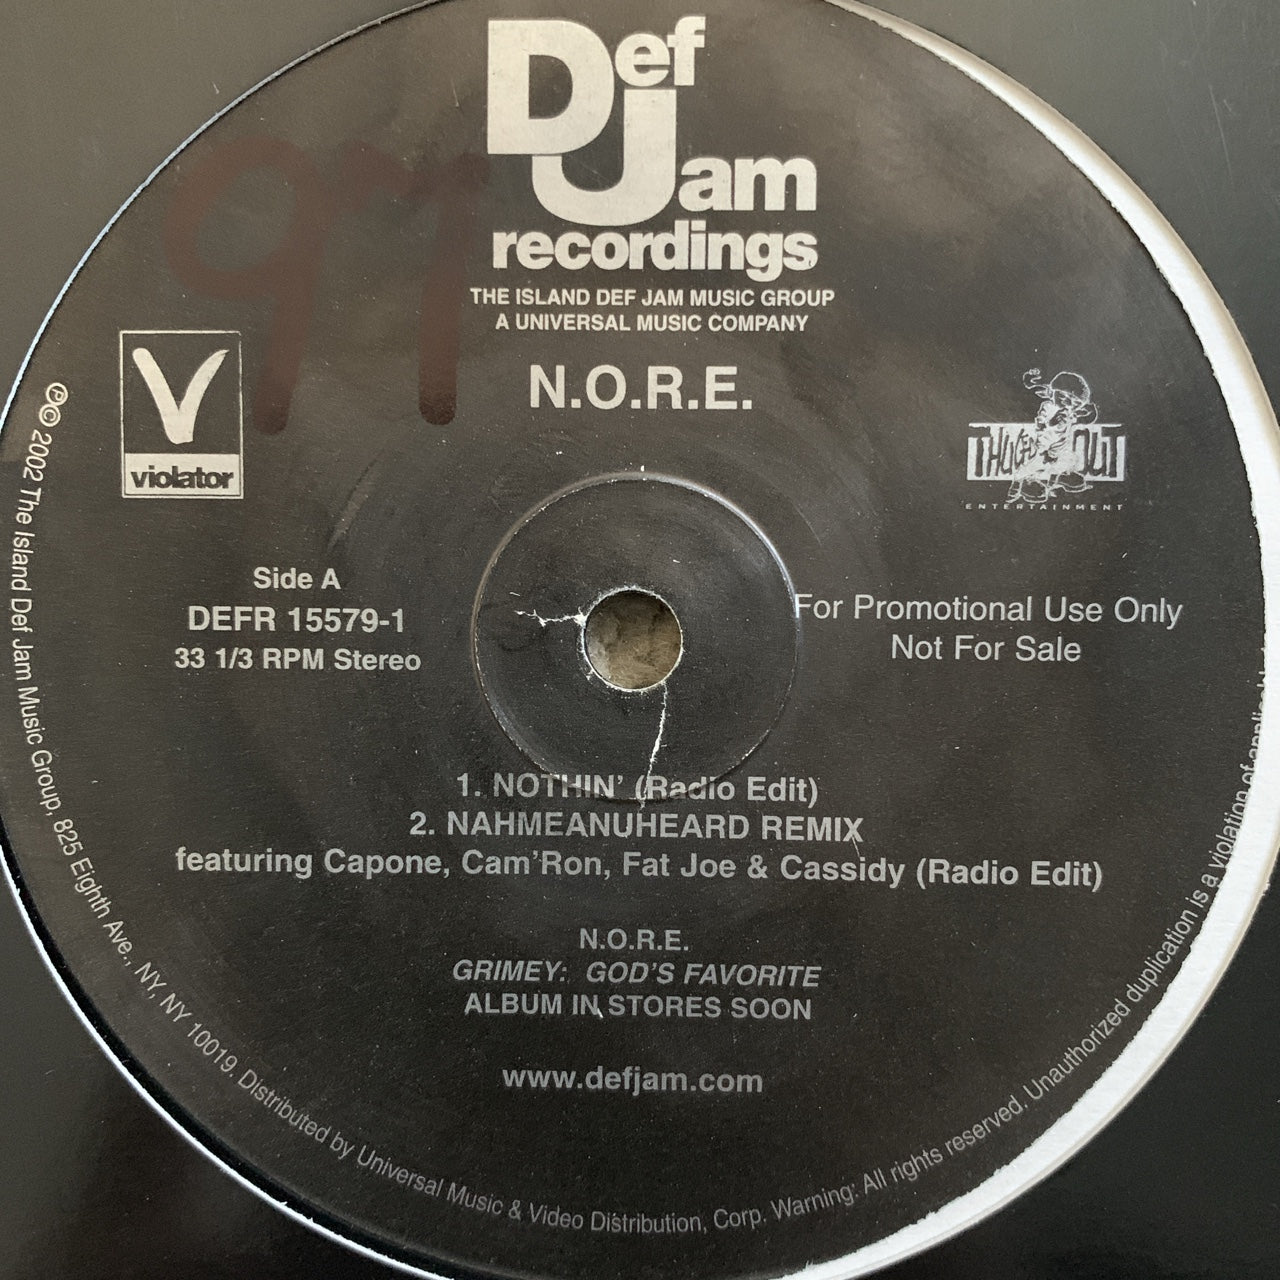 N.O.R.E. “Nothin” Original Radio Edit, Dj Promo Version